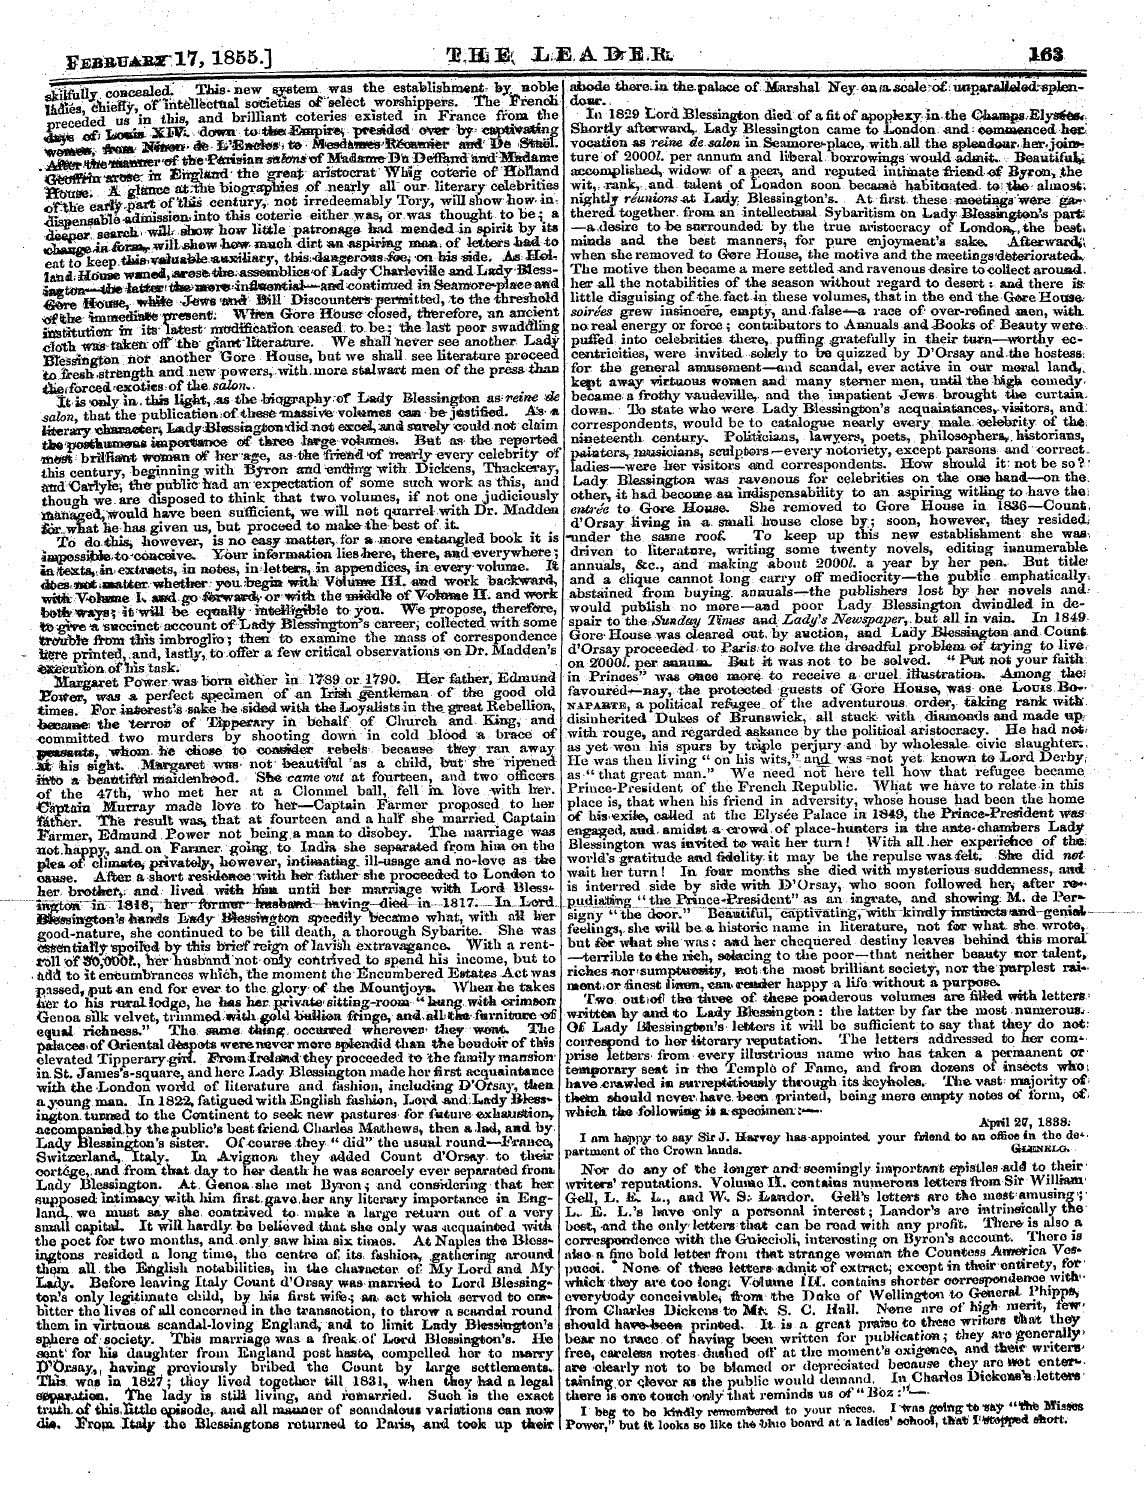 Leader (1850-1860): jS F Y, 2nd edition - Tenr Was The Fbbb^Kwrl7, 1855.] ' Wimm L...